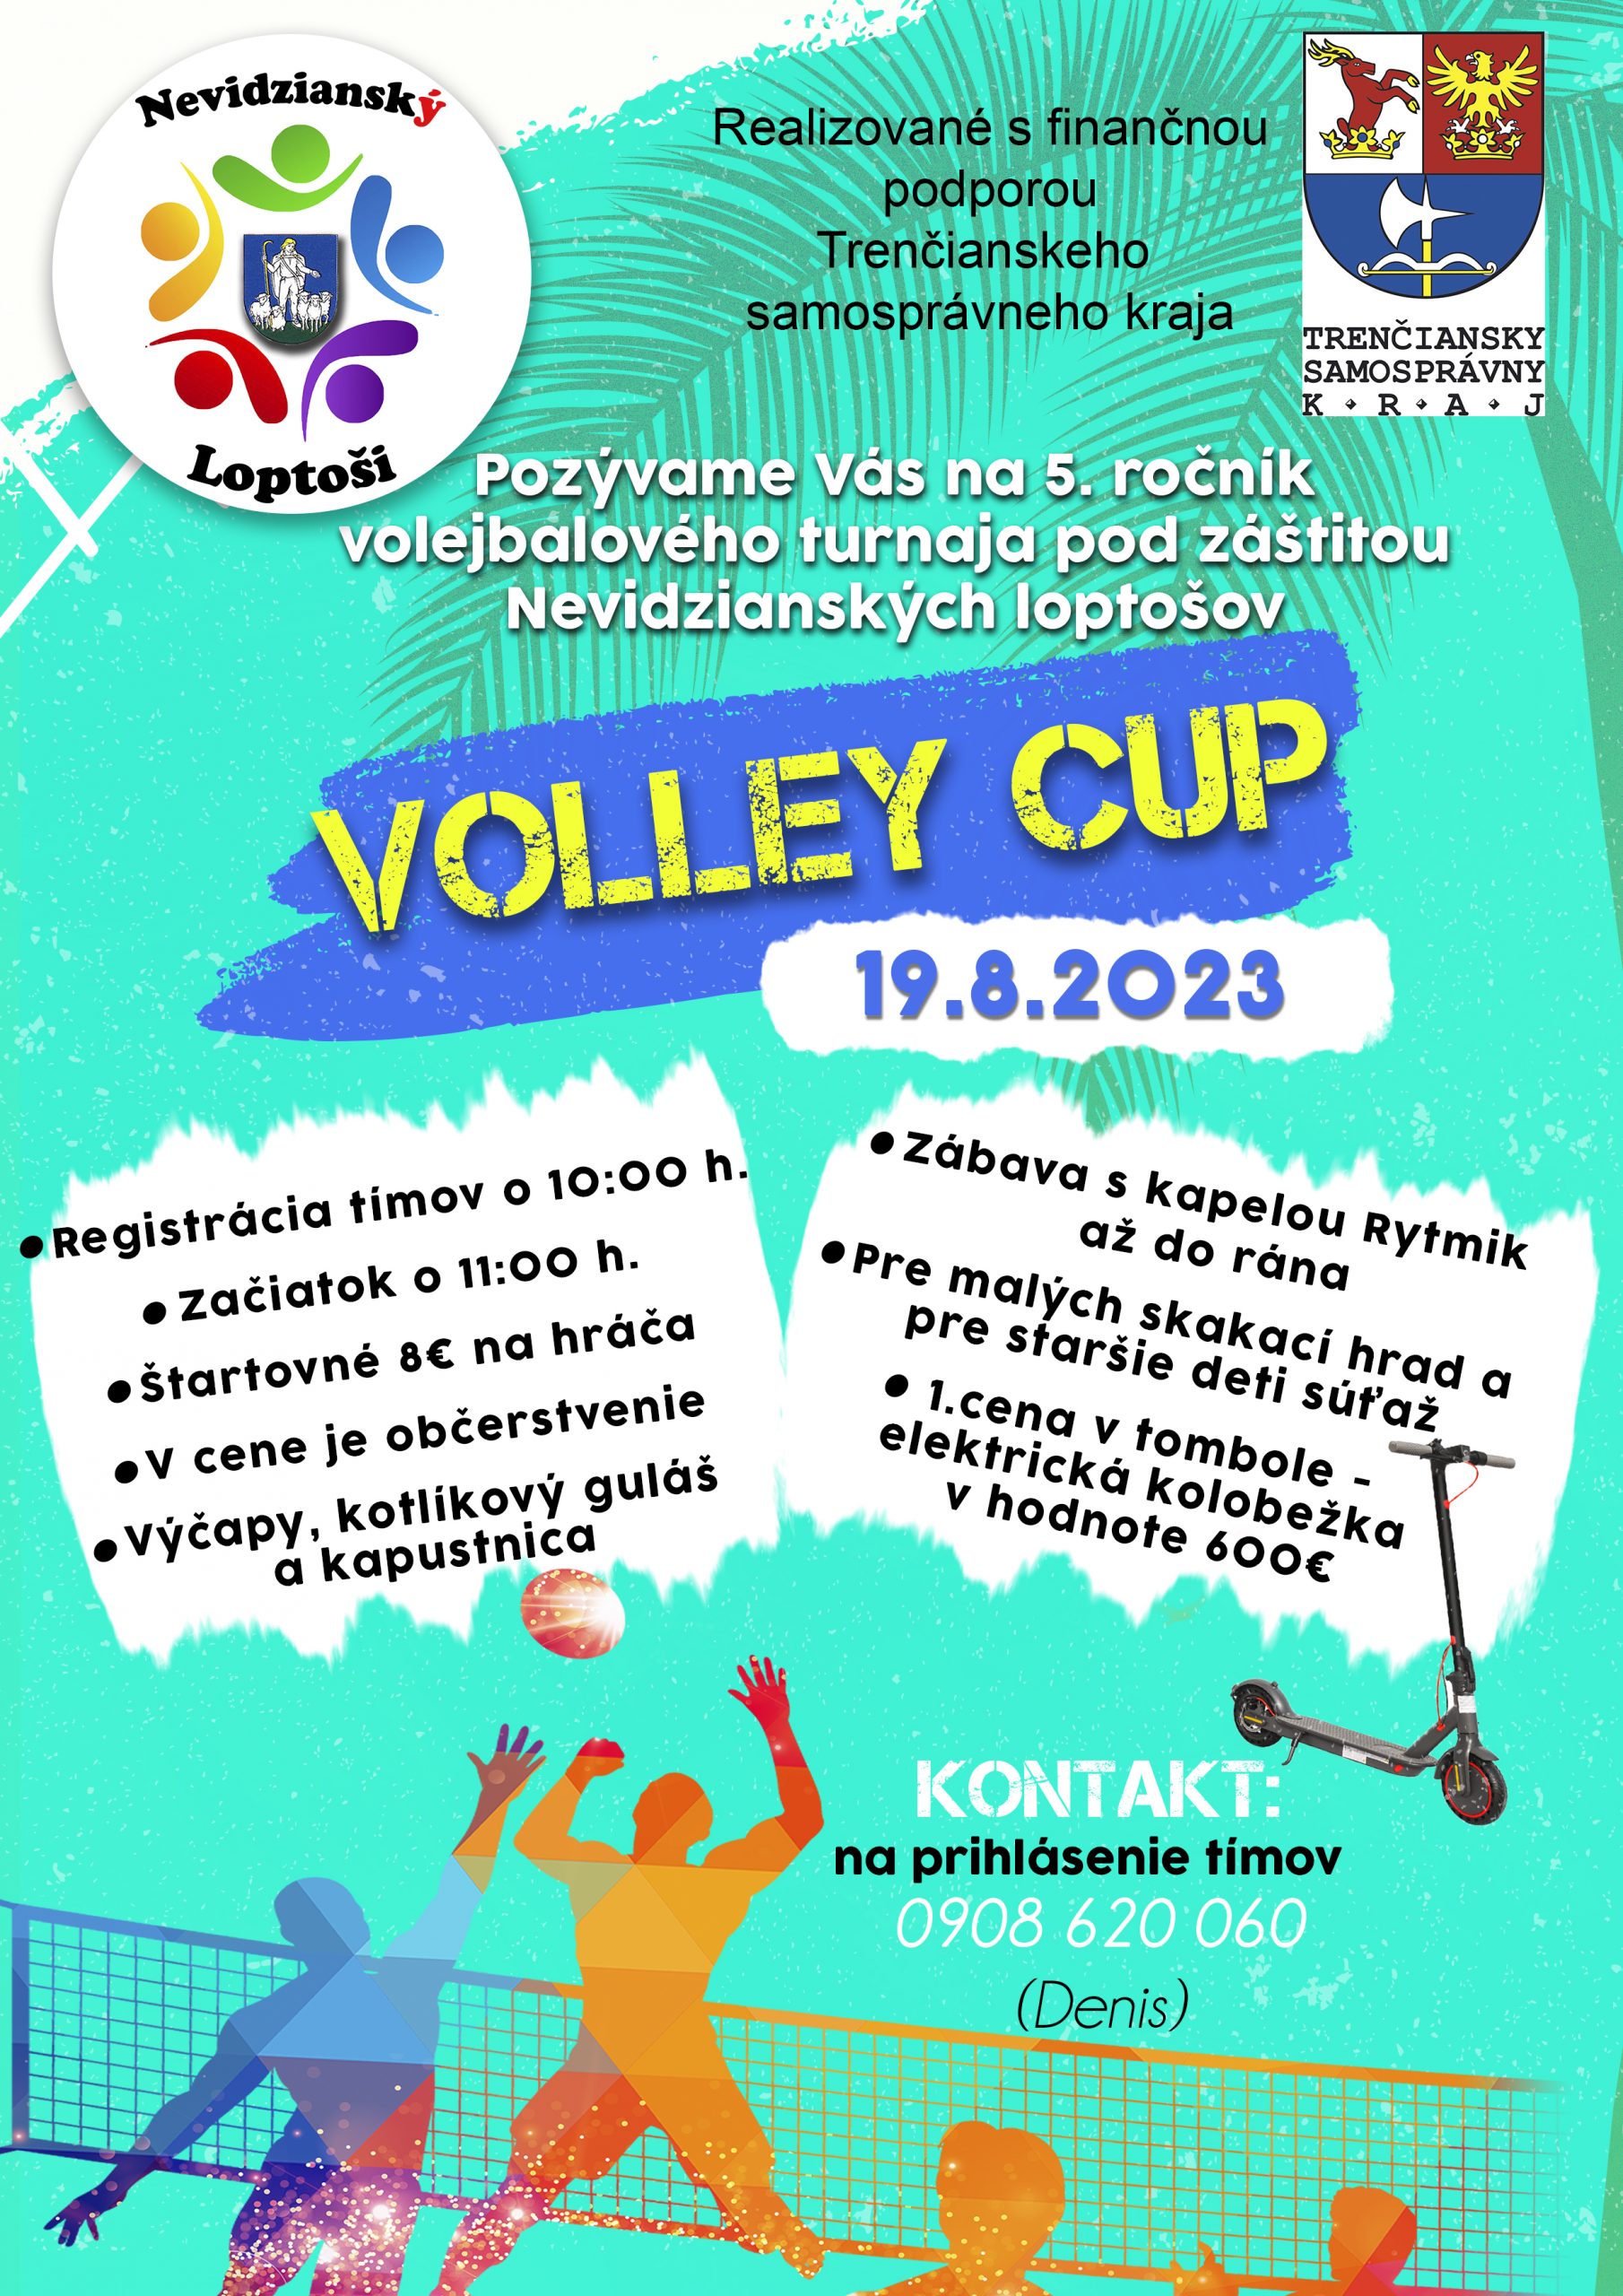 Volley cup 2023